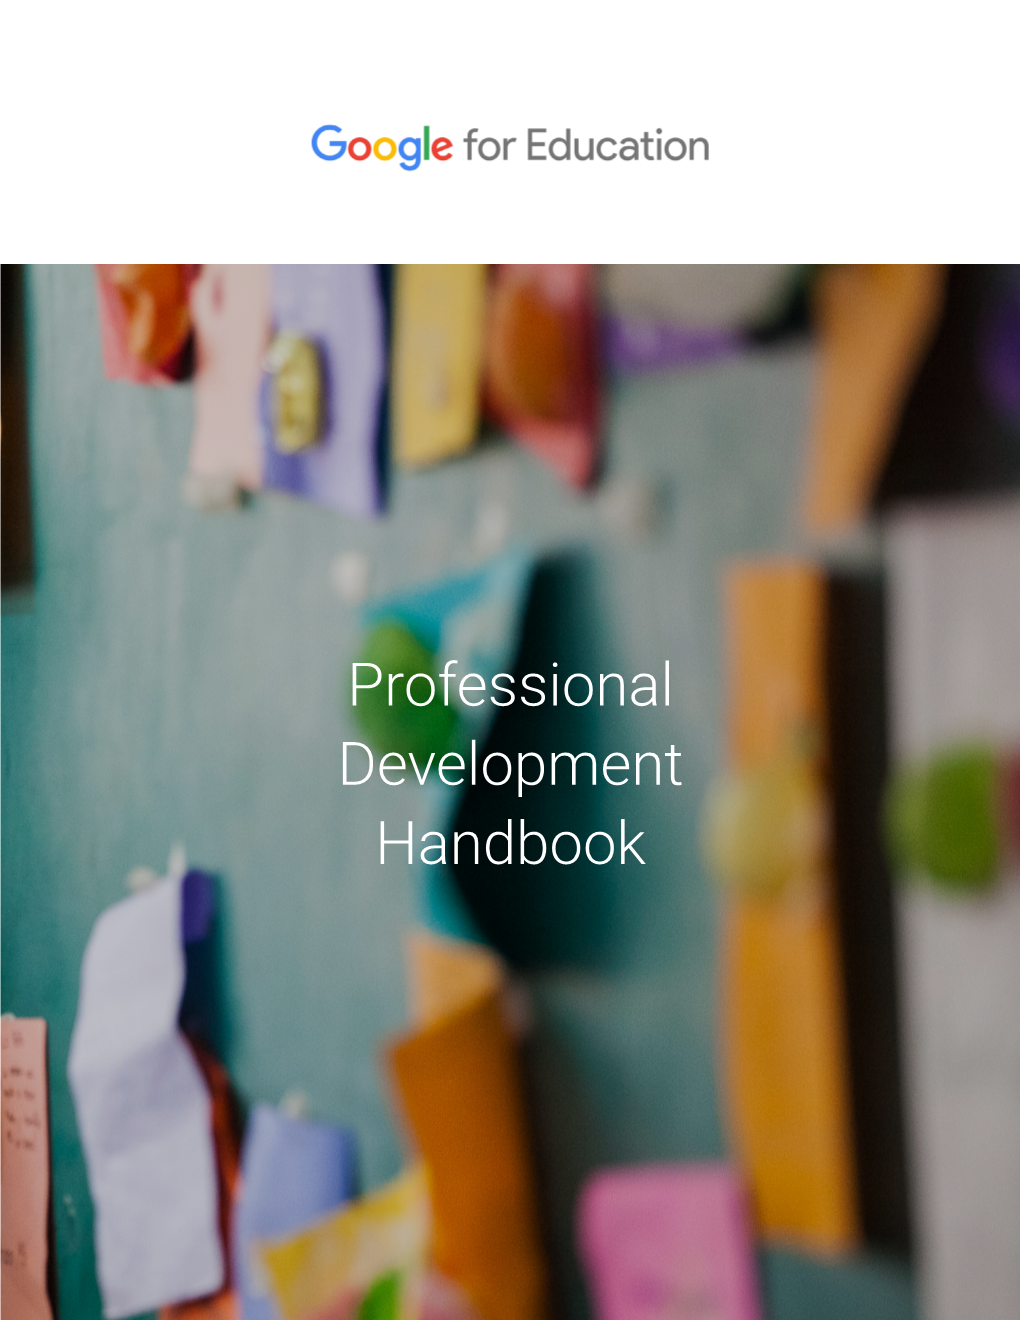 Professional Development Handbook Contents